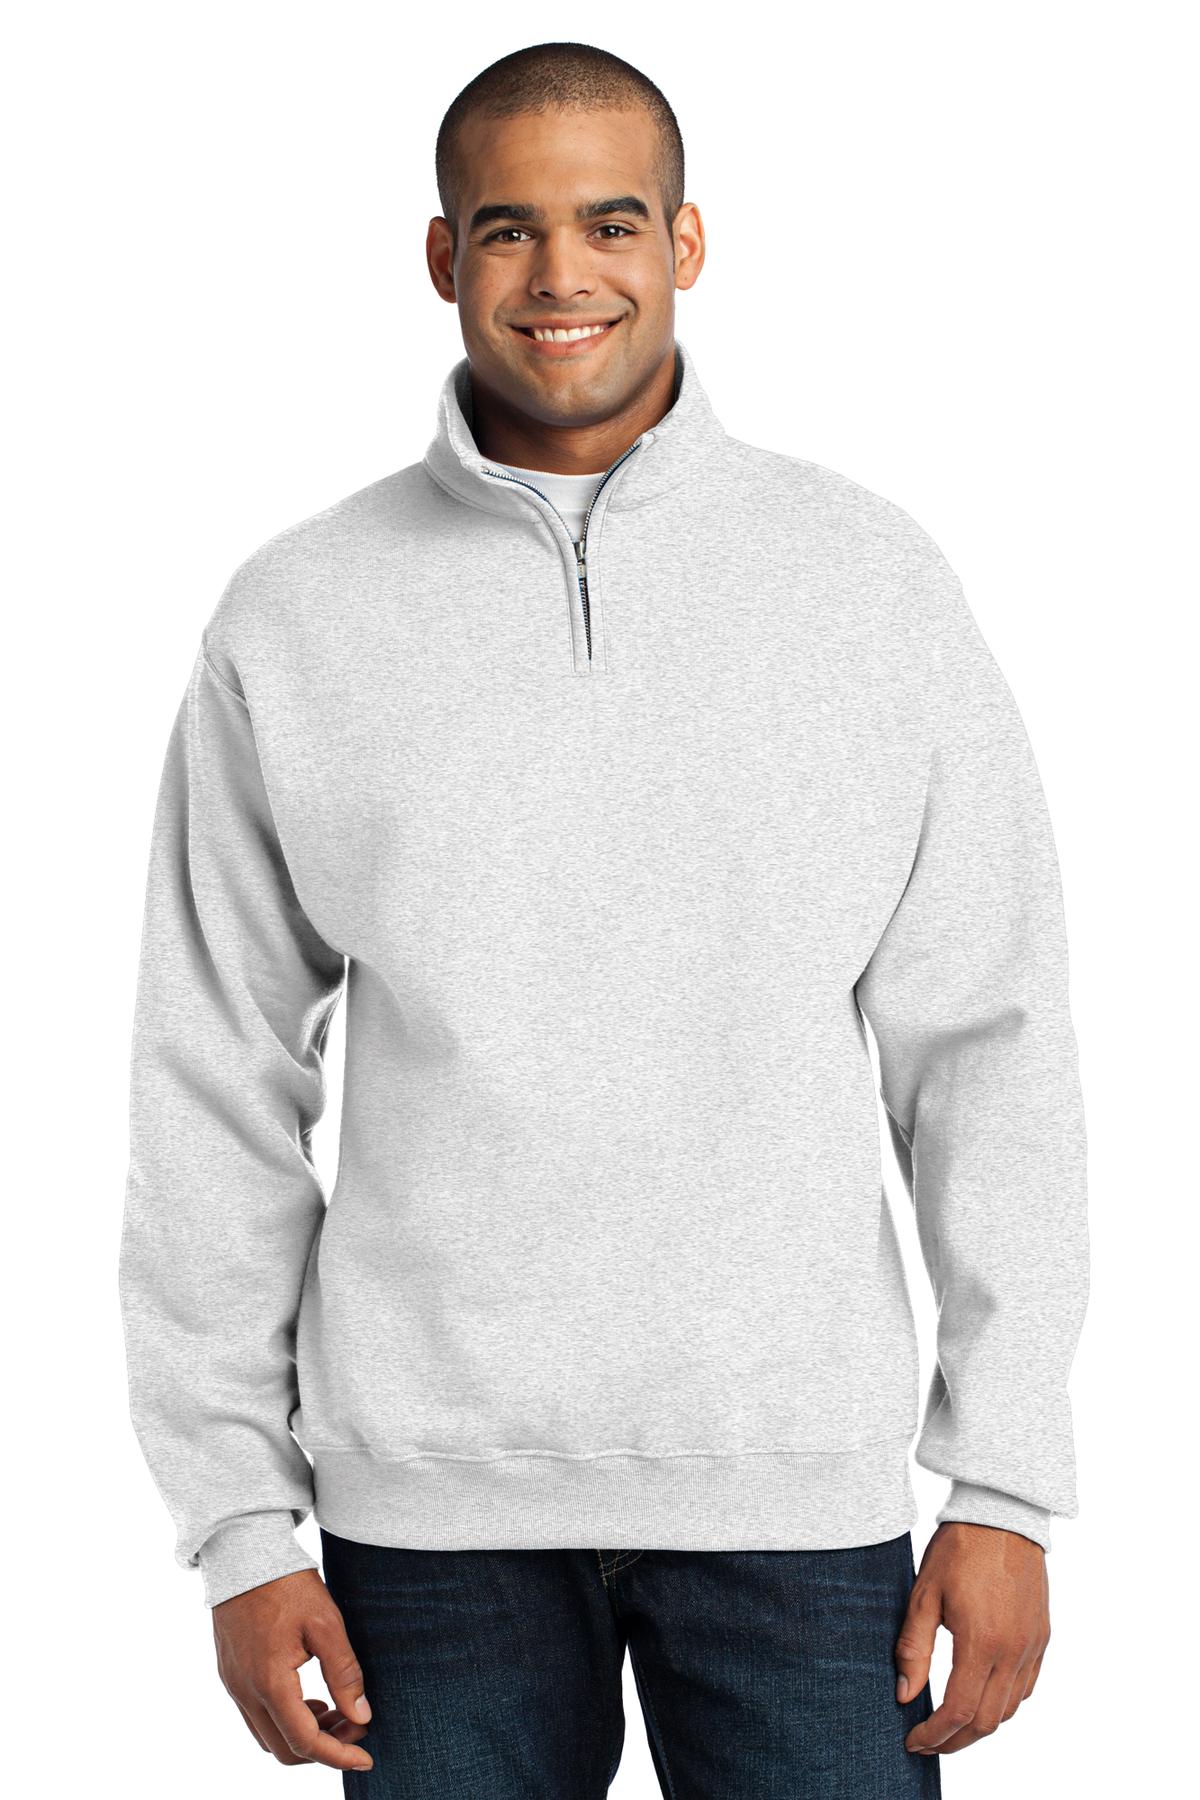 Shop Custom Cadet Shirt 995M NuBlend Sweatshirt. - ® 1/4-Zip - JERZEES ® Collar